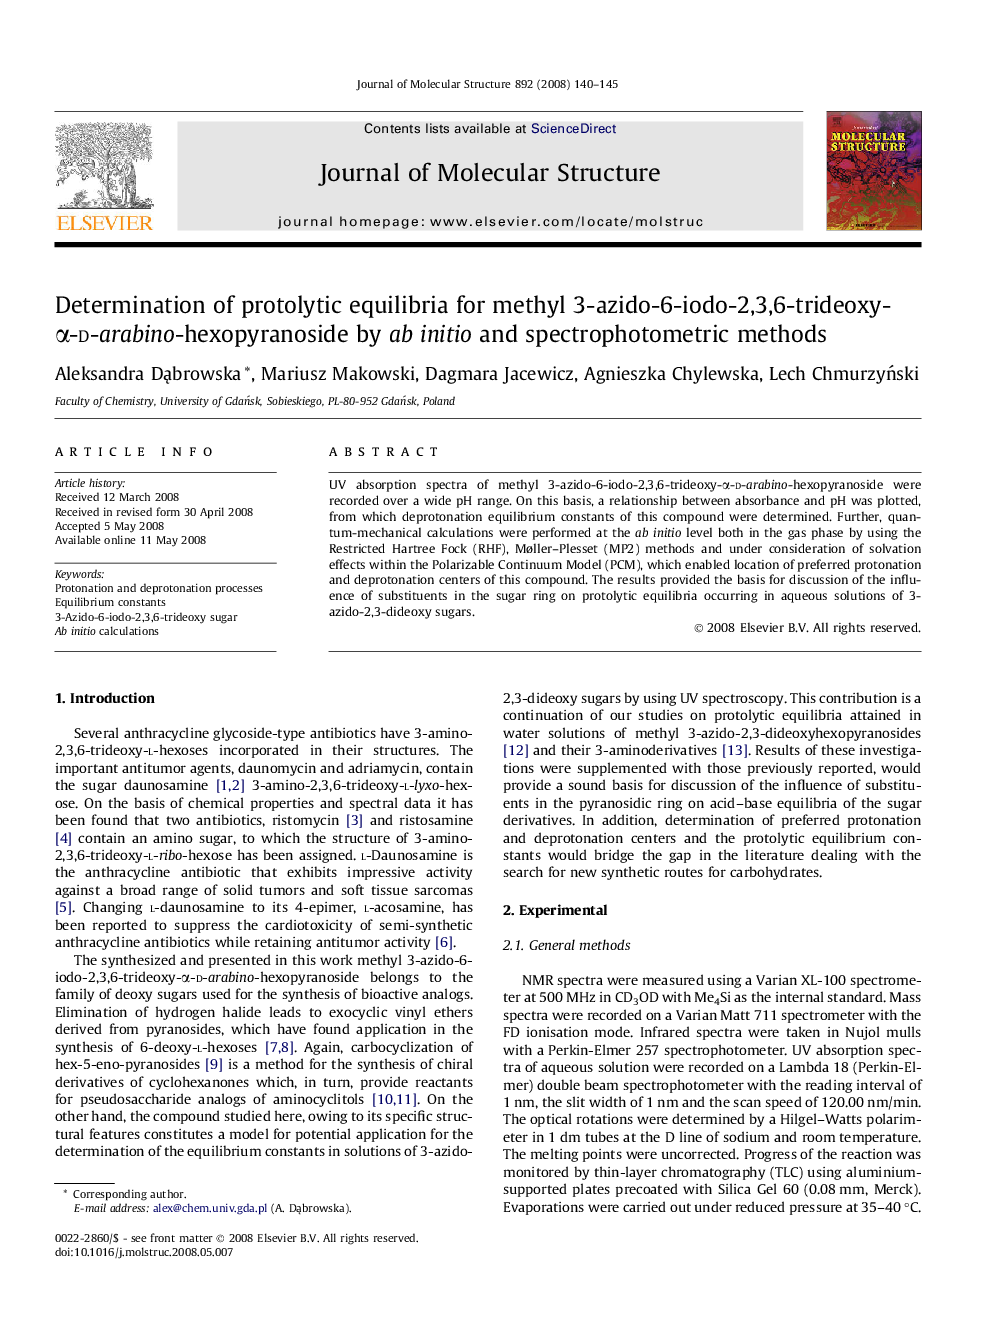 Determination of protolytic equilibria for methyl 3-azido-6-iodo-2,3,6-trideoxy-α-d-arabino-hexopyranoside by ab initio and spectrophotometric methods